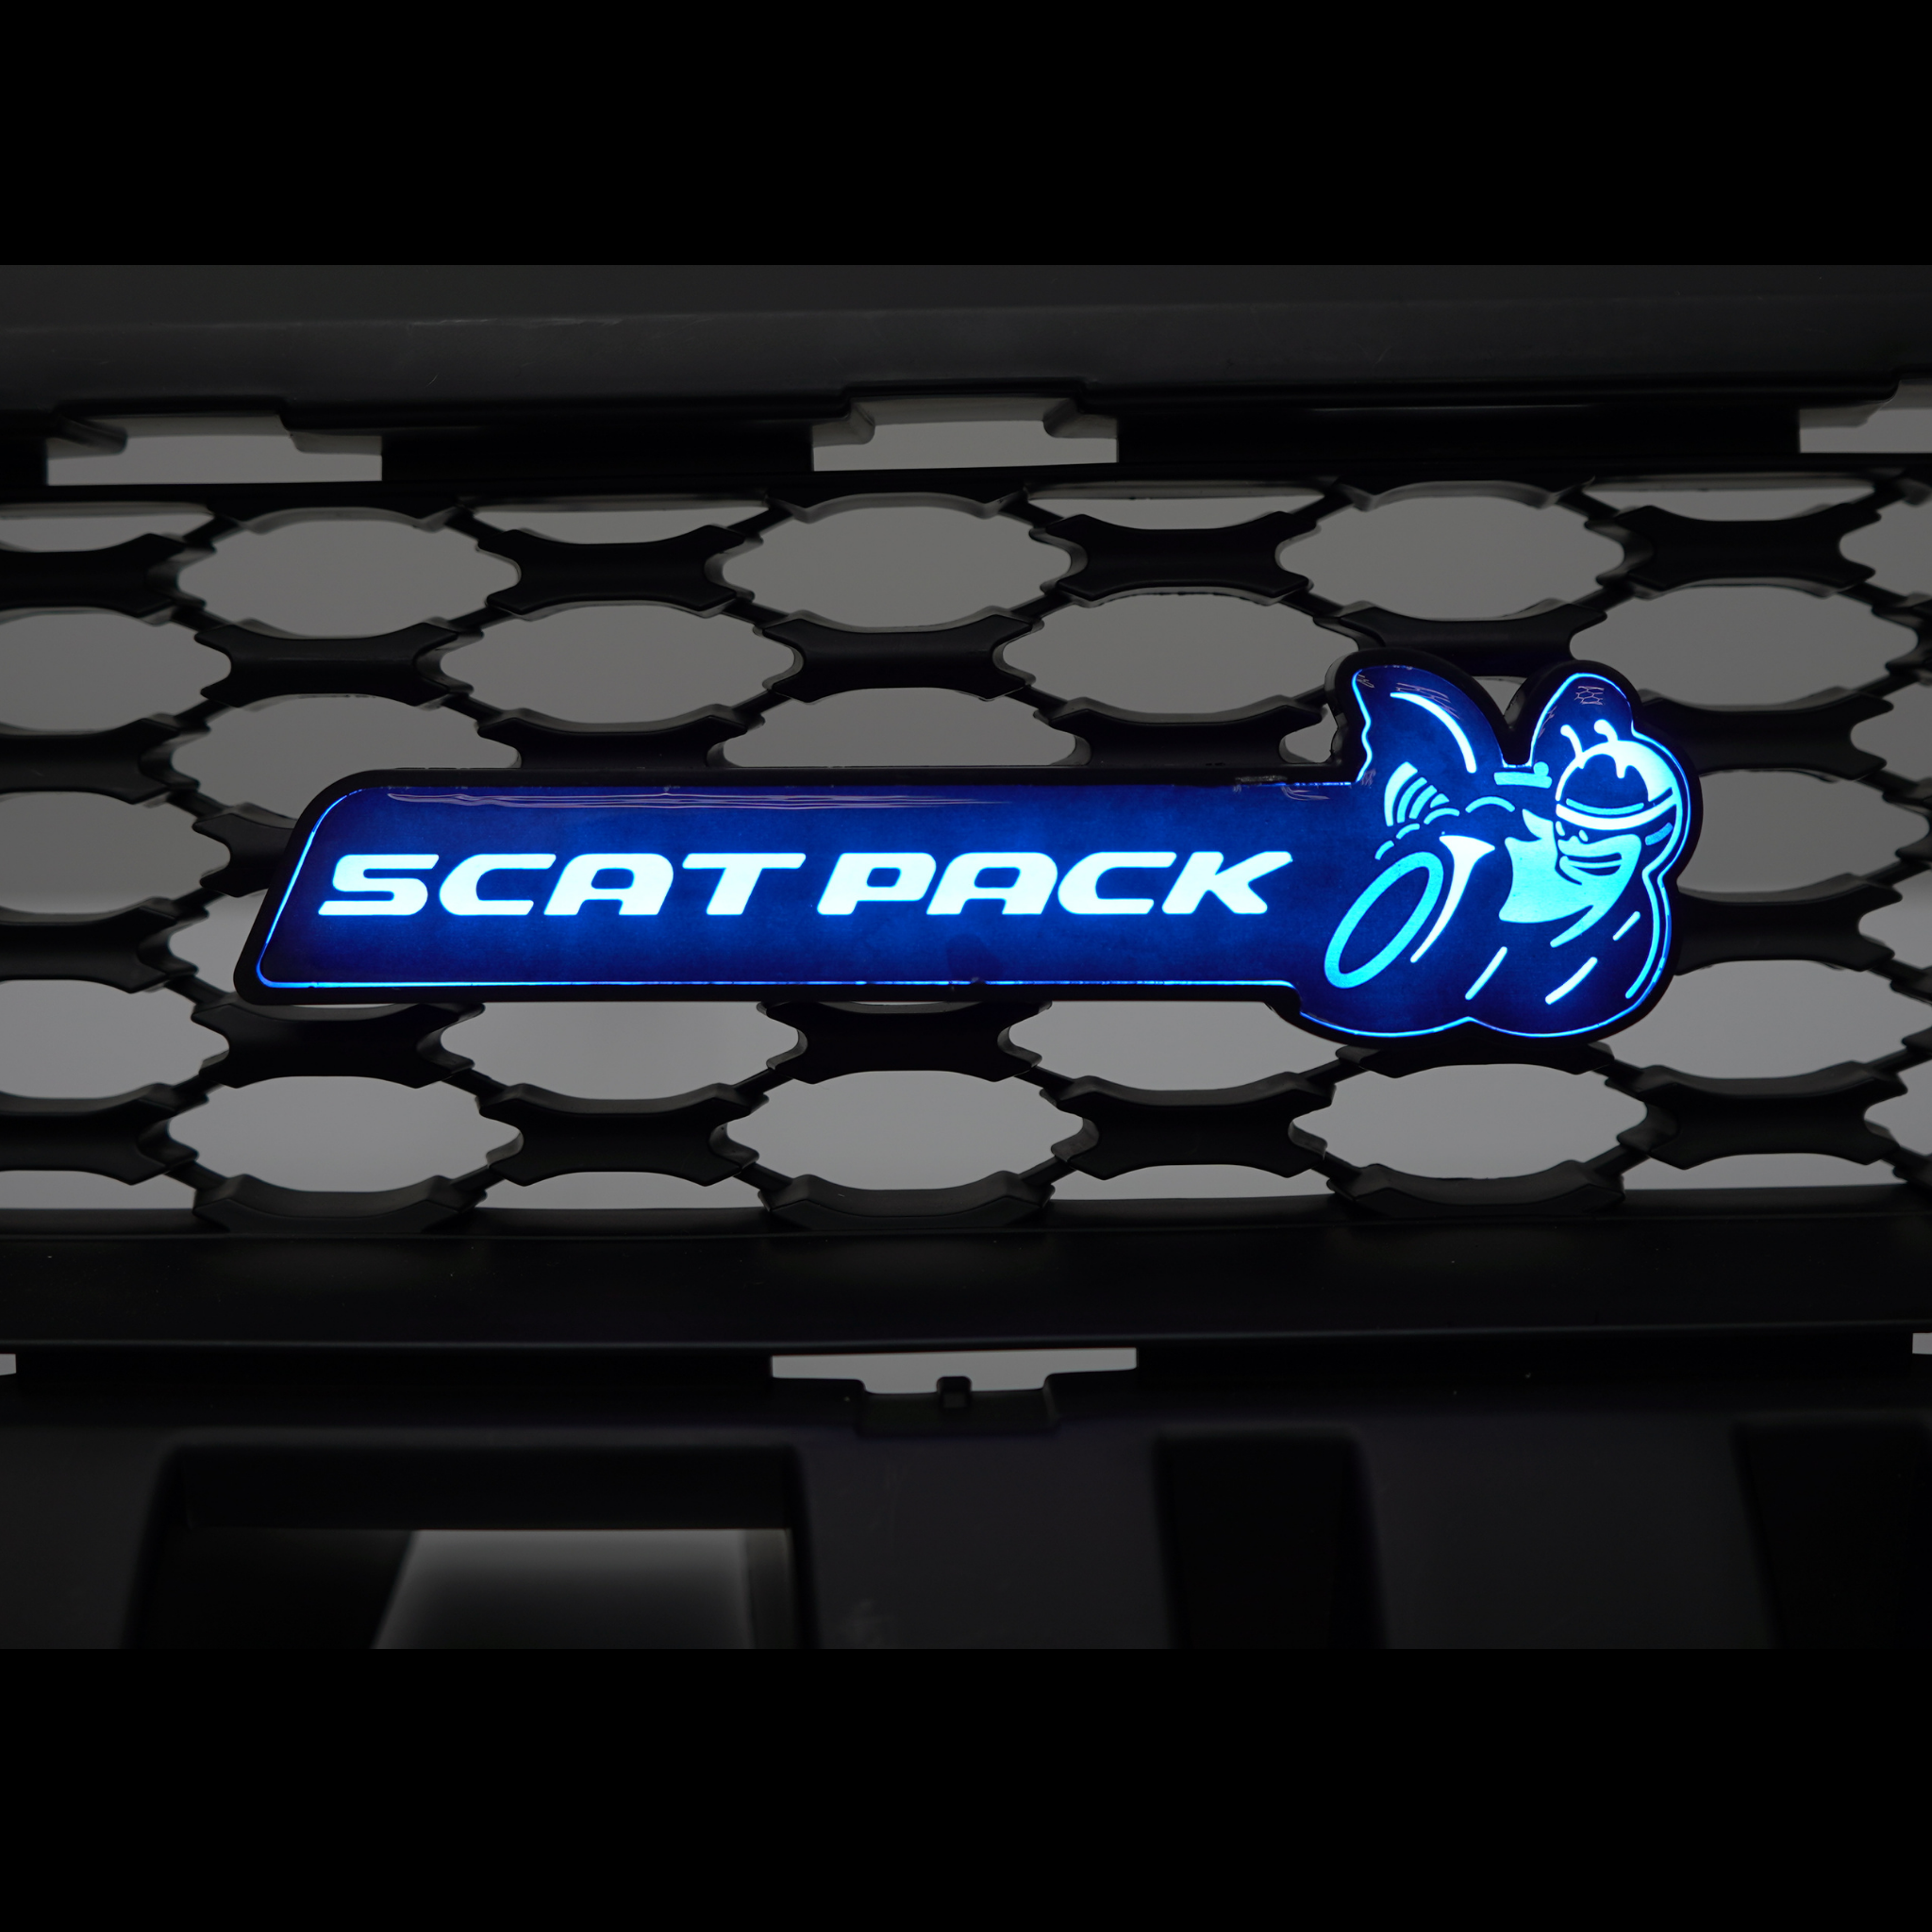 Scatpack Multicolor Flow Illuminated LED Emblem